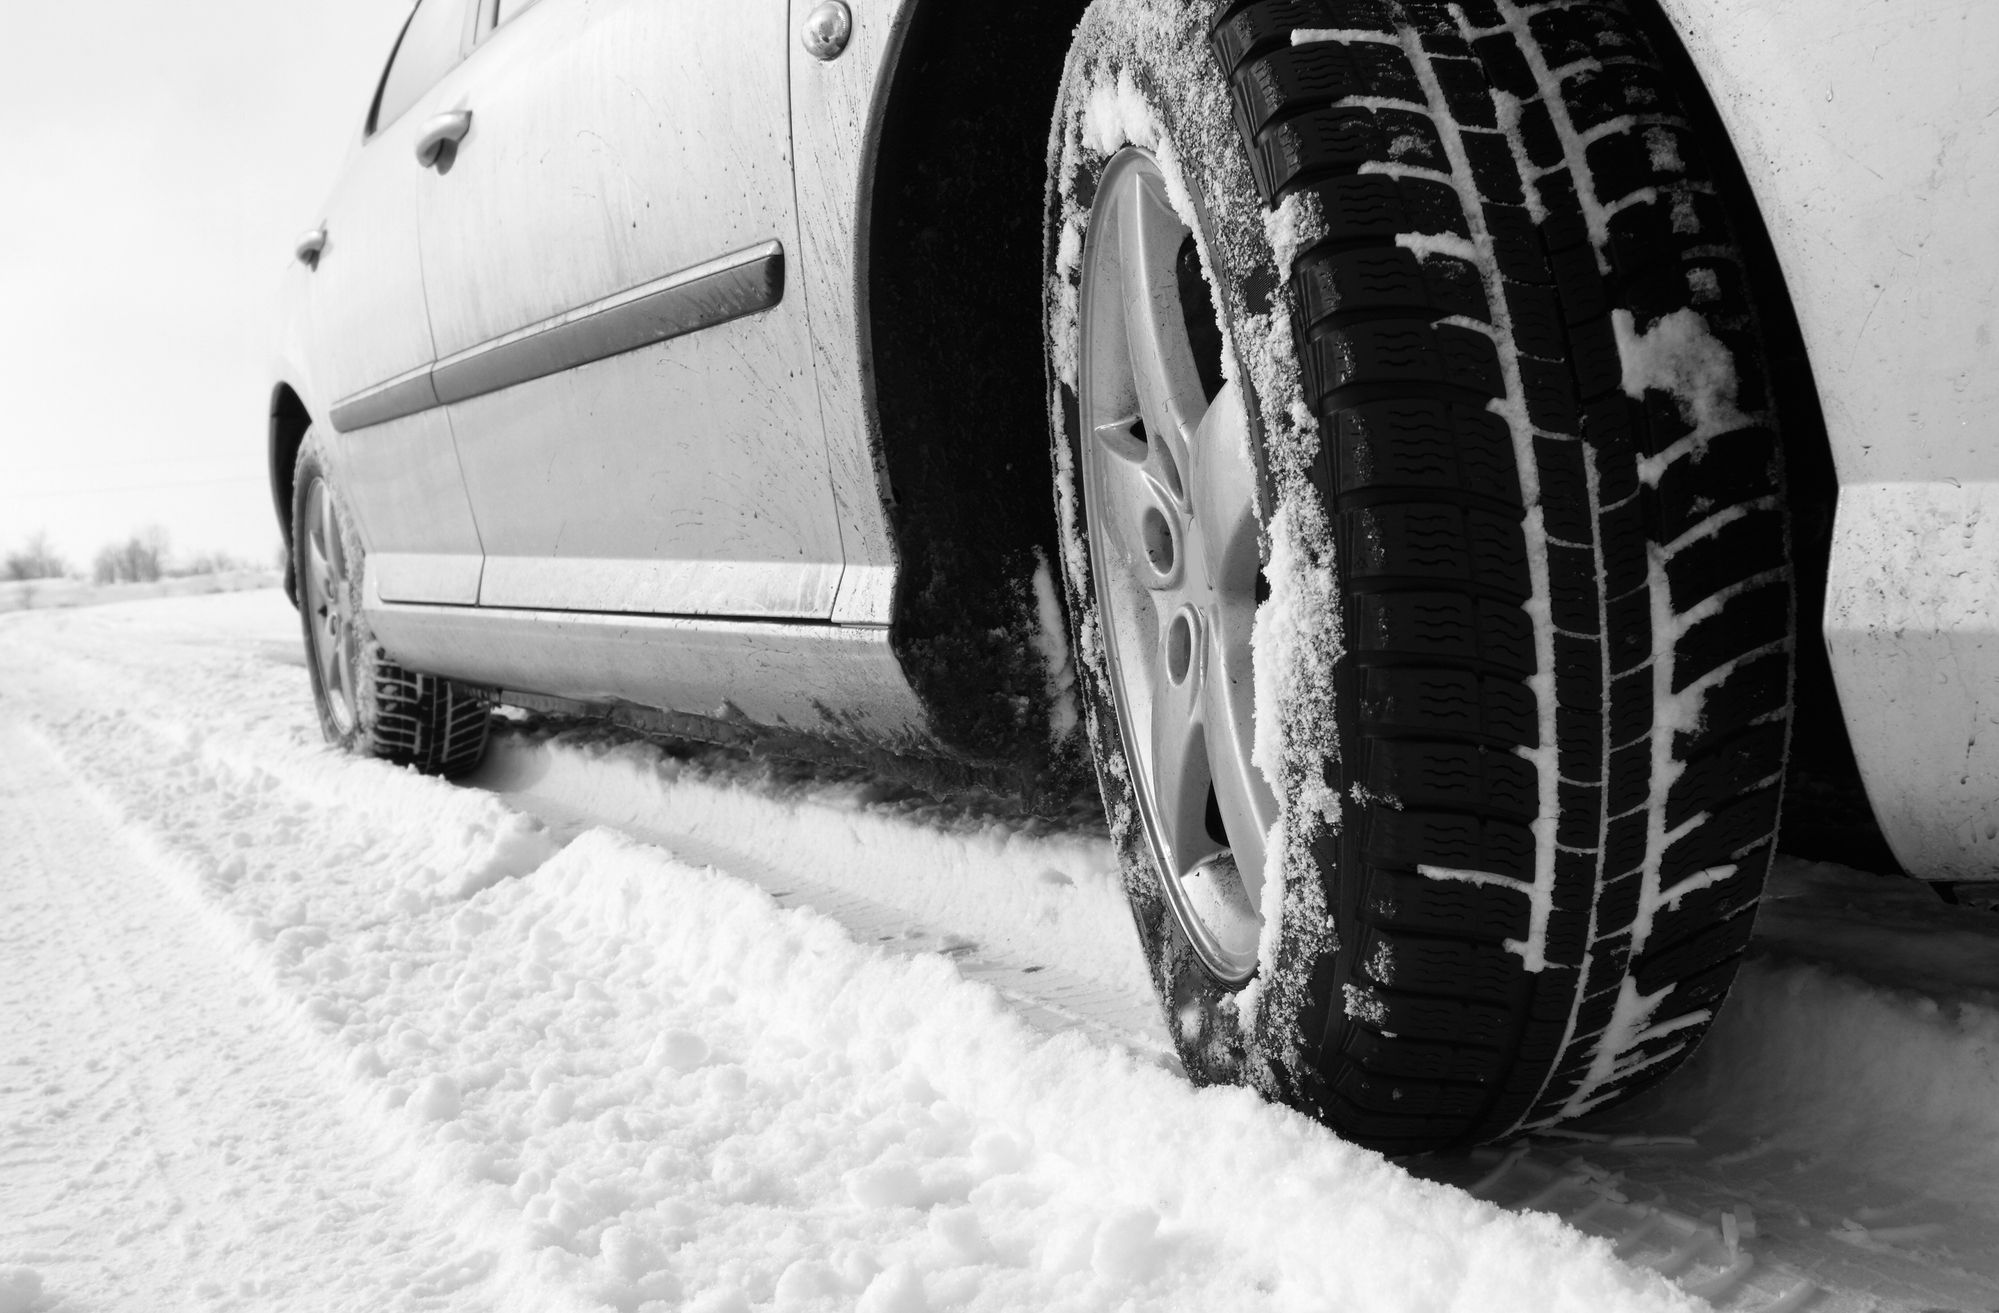 Winter Weather: Best Winter Car Tips